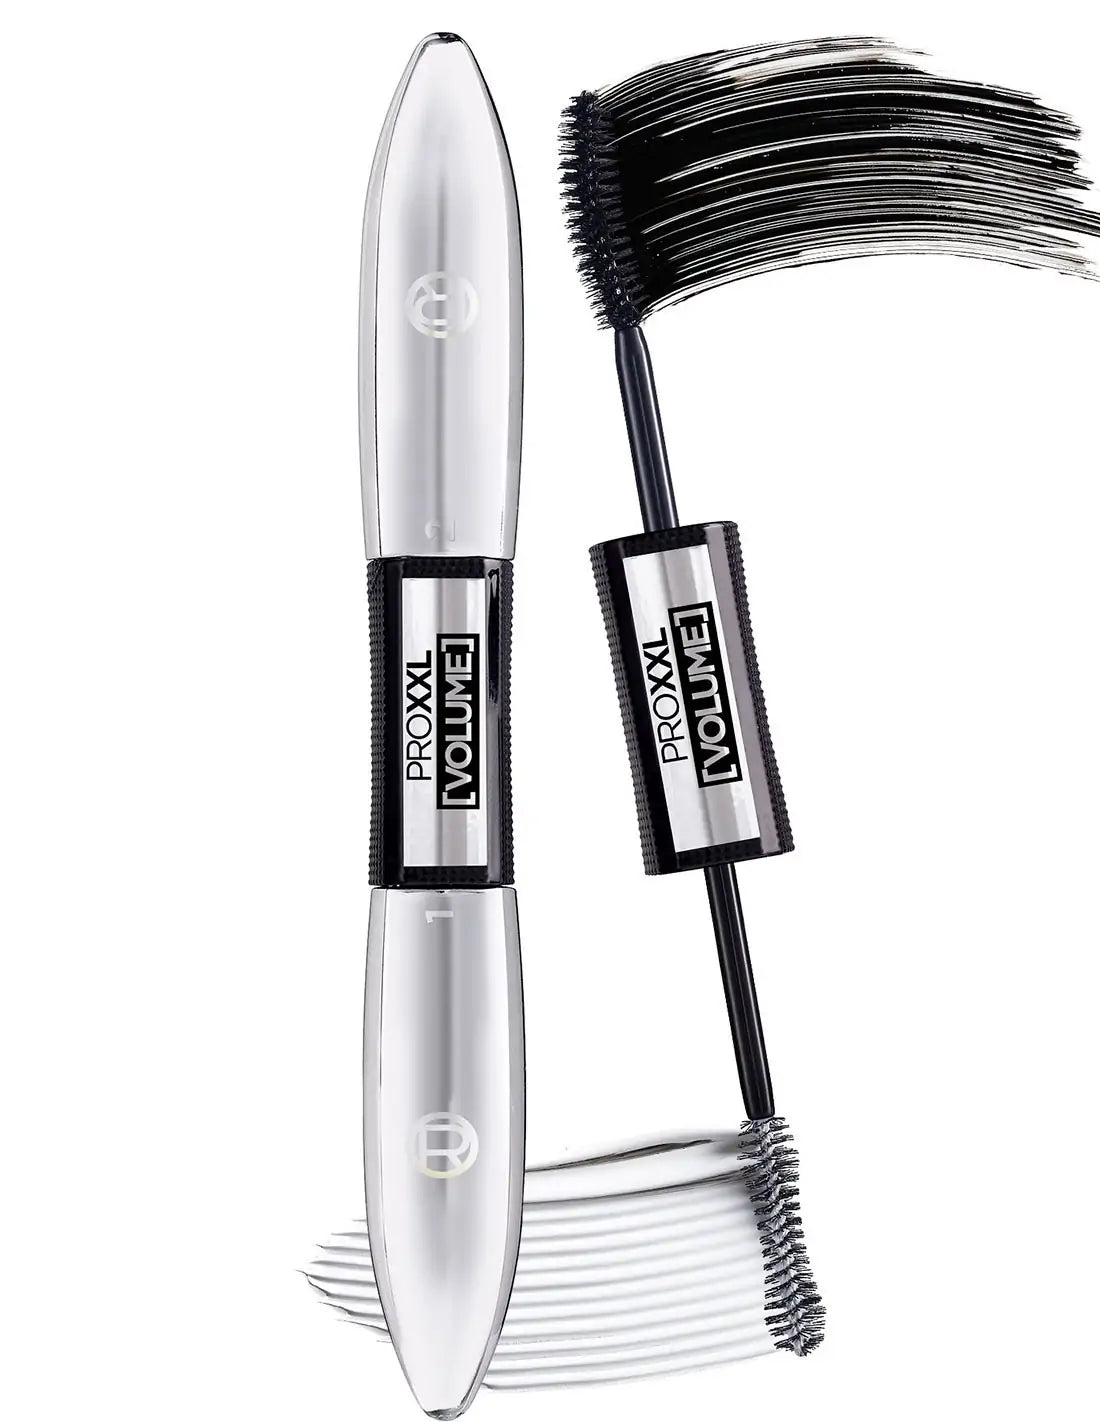 L'Oréal Paris Pro XXL [Volume] Mascara Black mascara Volare Makeup   